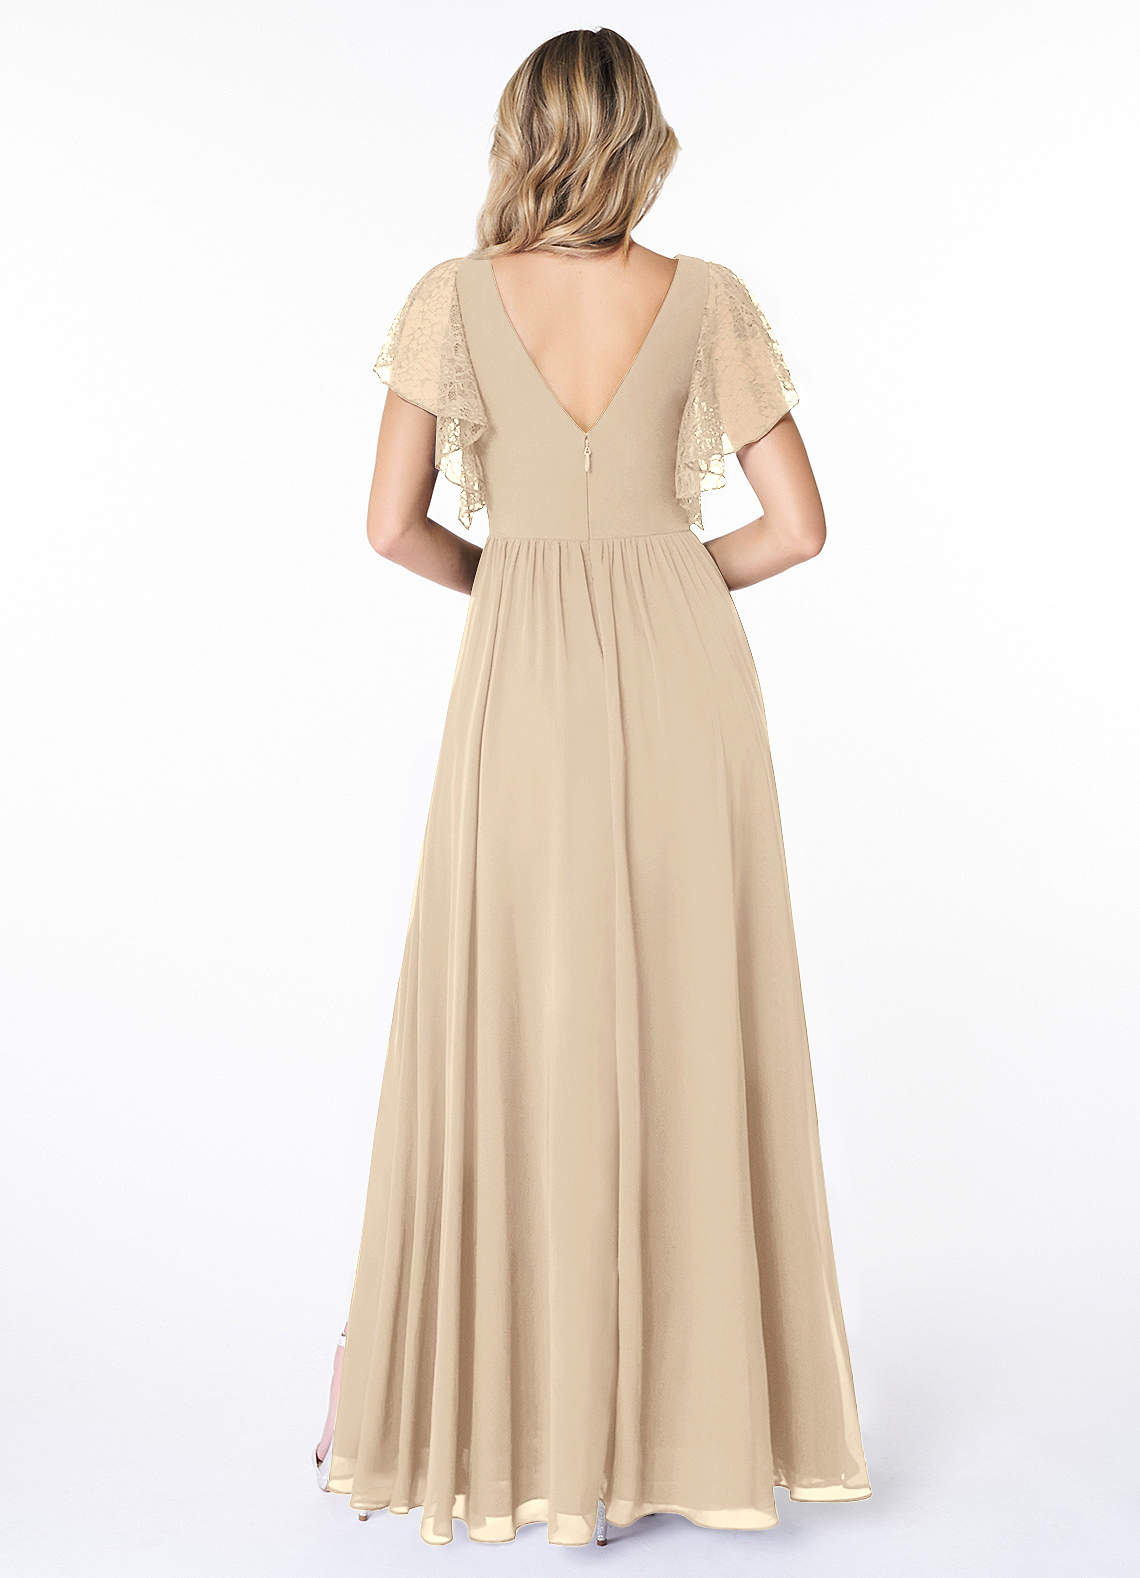 Azazie Zella Bridesmaid Dresses A-Line Lace Chiffon Floor-Length Dress image1